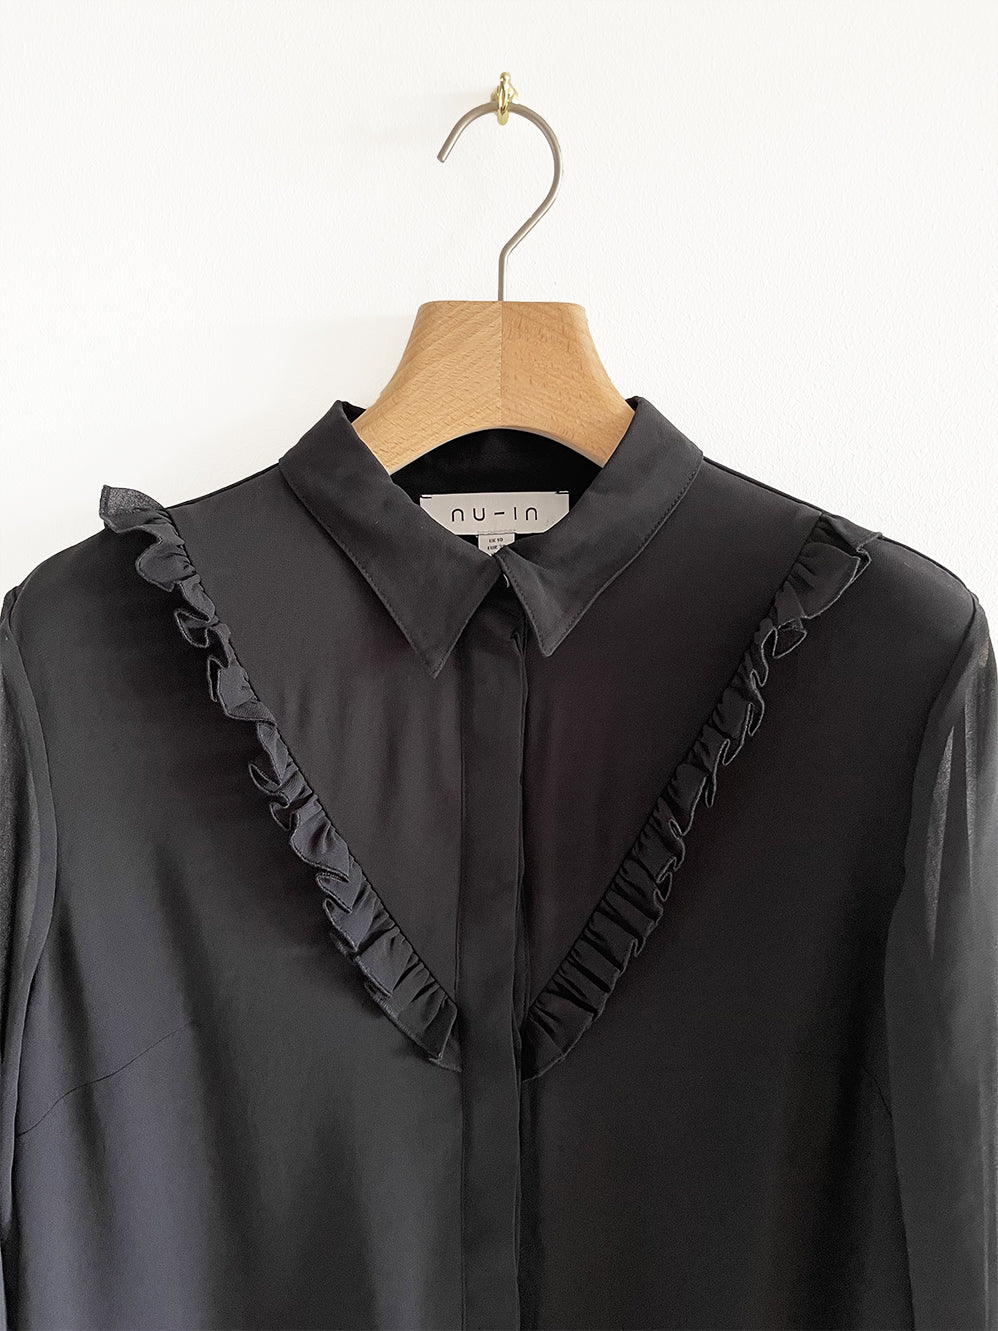 Black Shirt Dress with Riffle